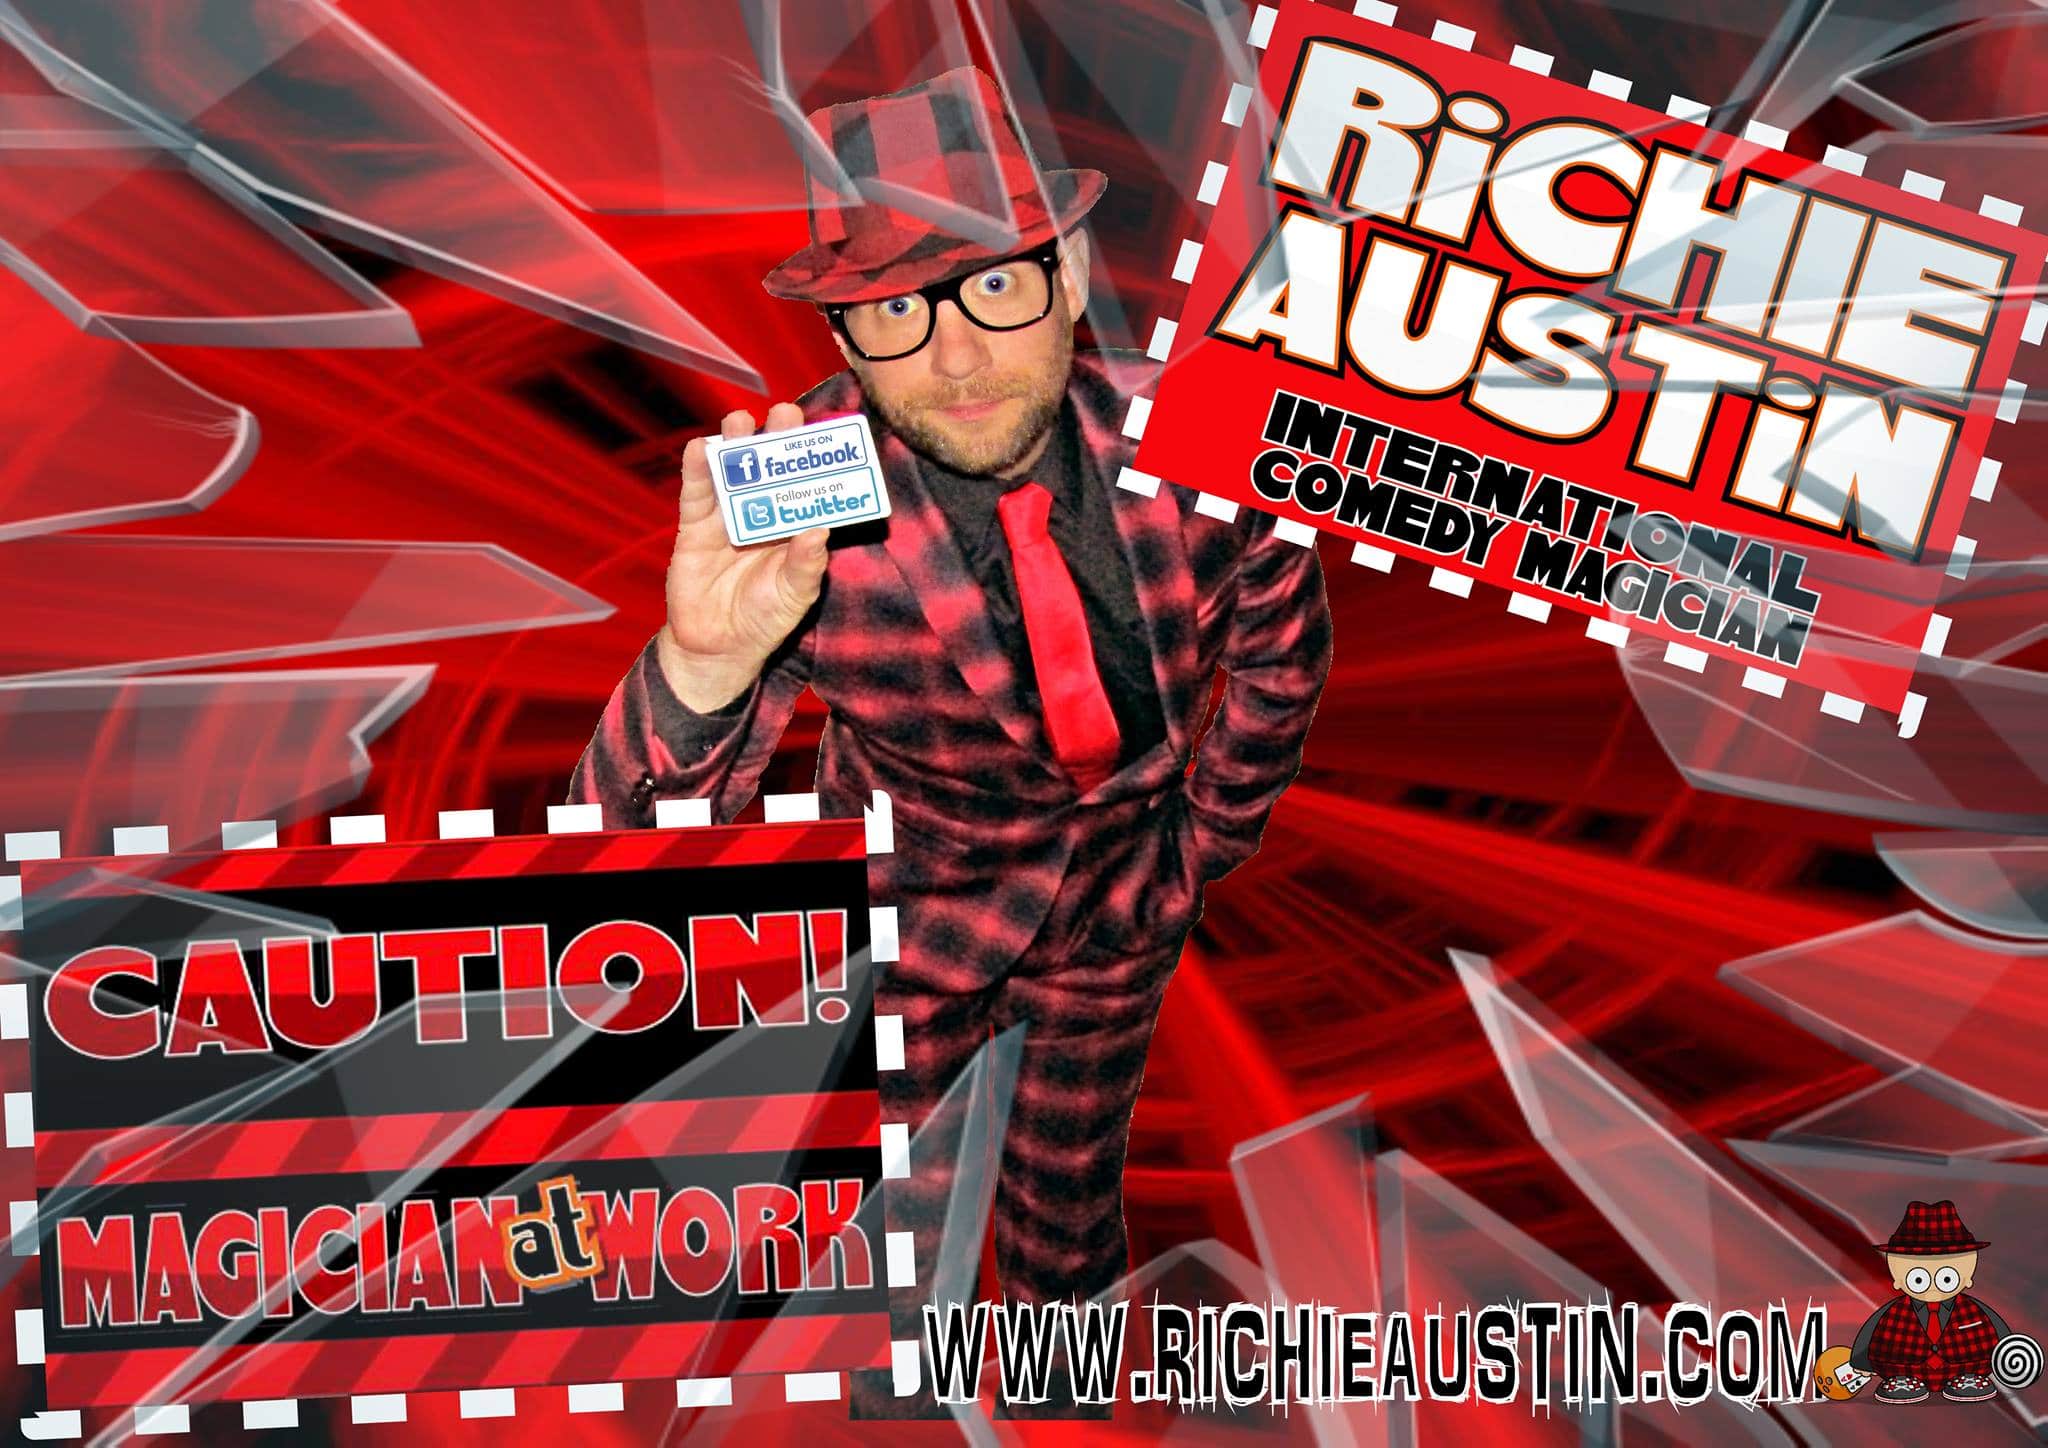 Comedy magician Richie Austin